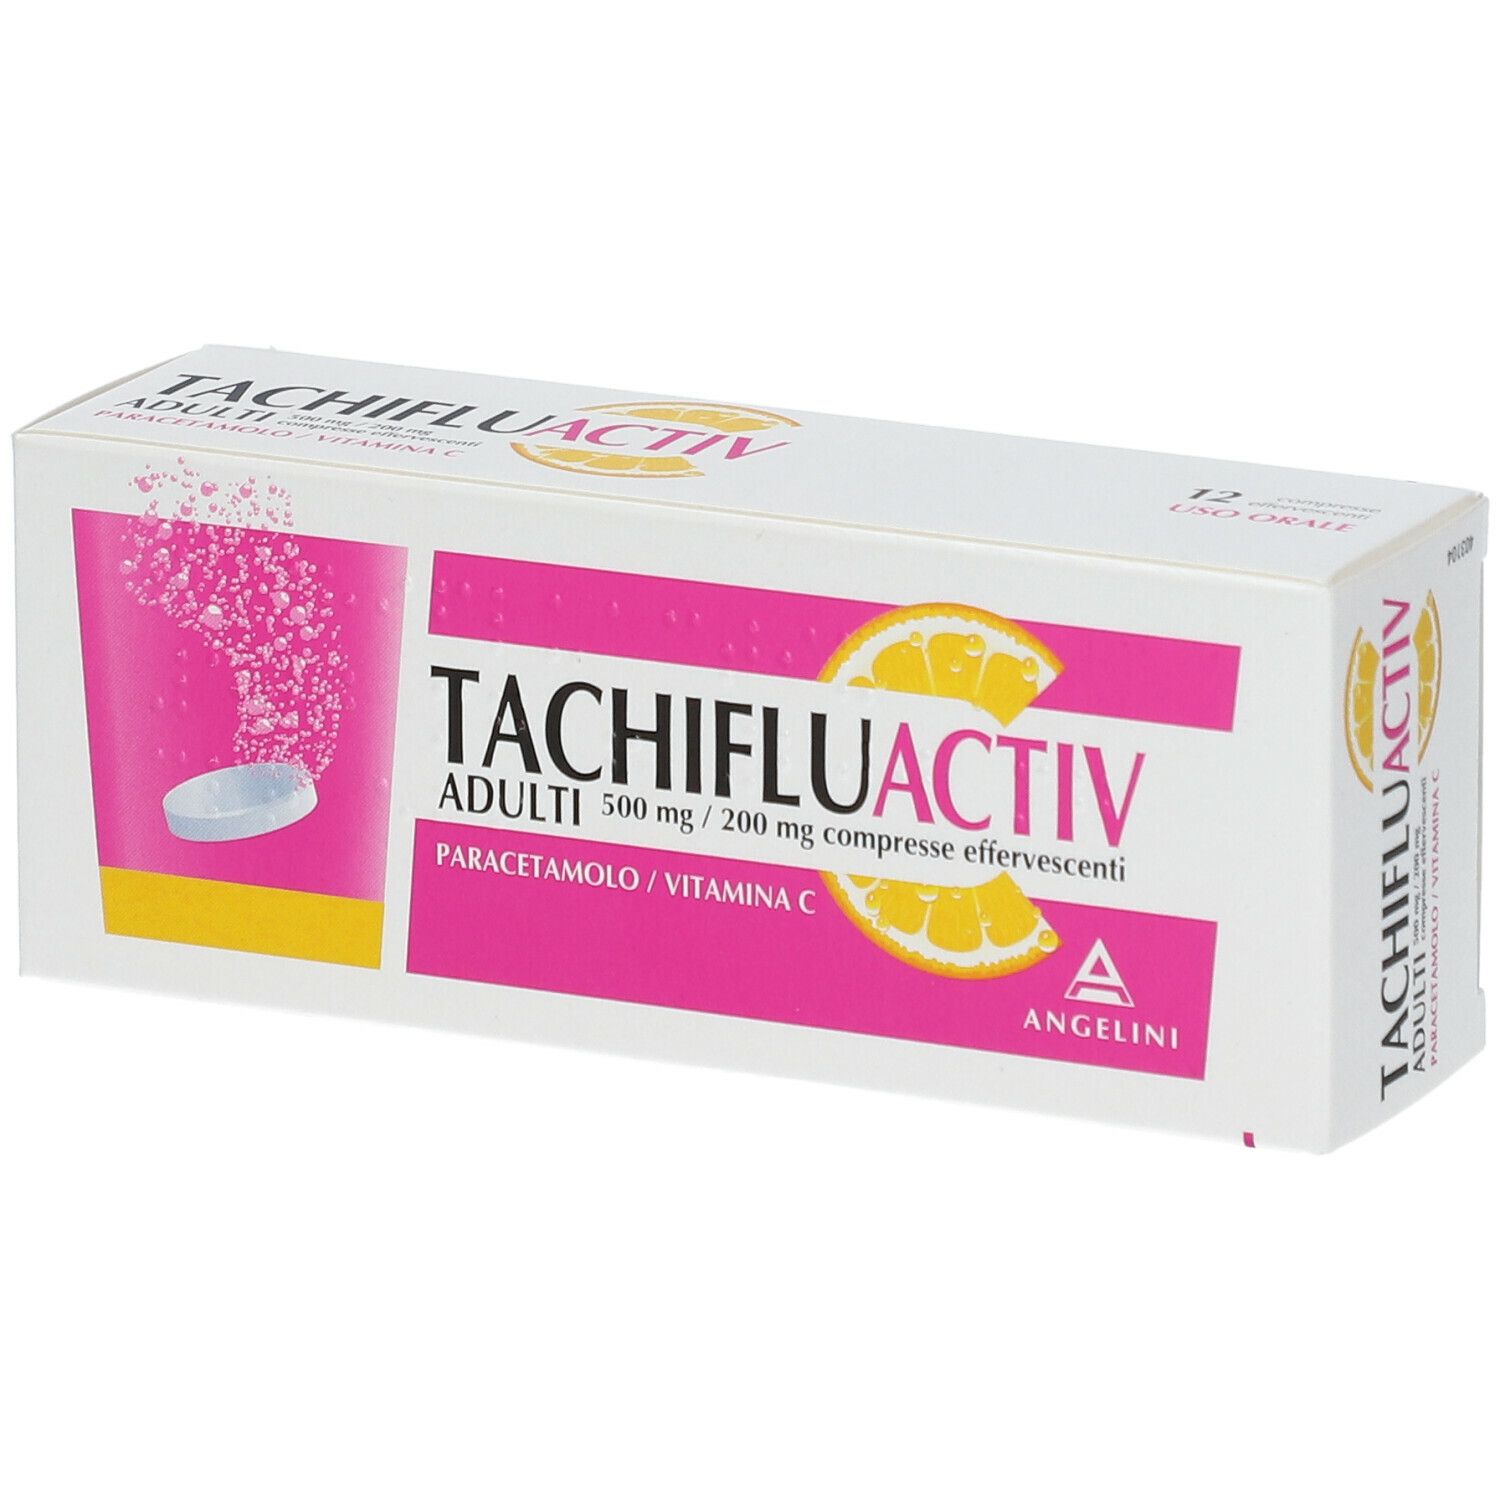 TACHIFLUACTIV ADULTI 500 mg / 200 mg compresse effervescenti